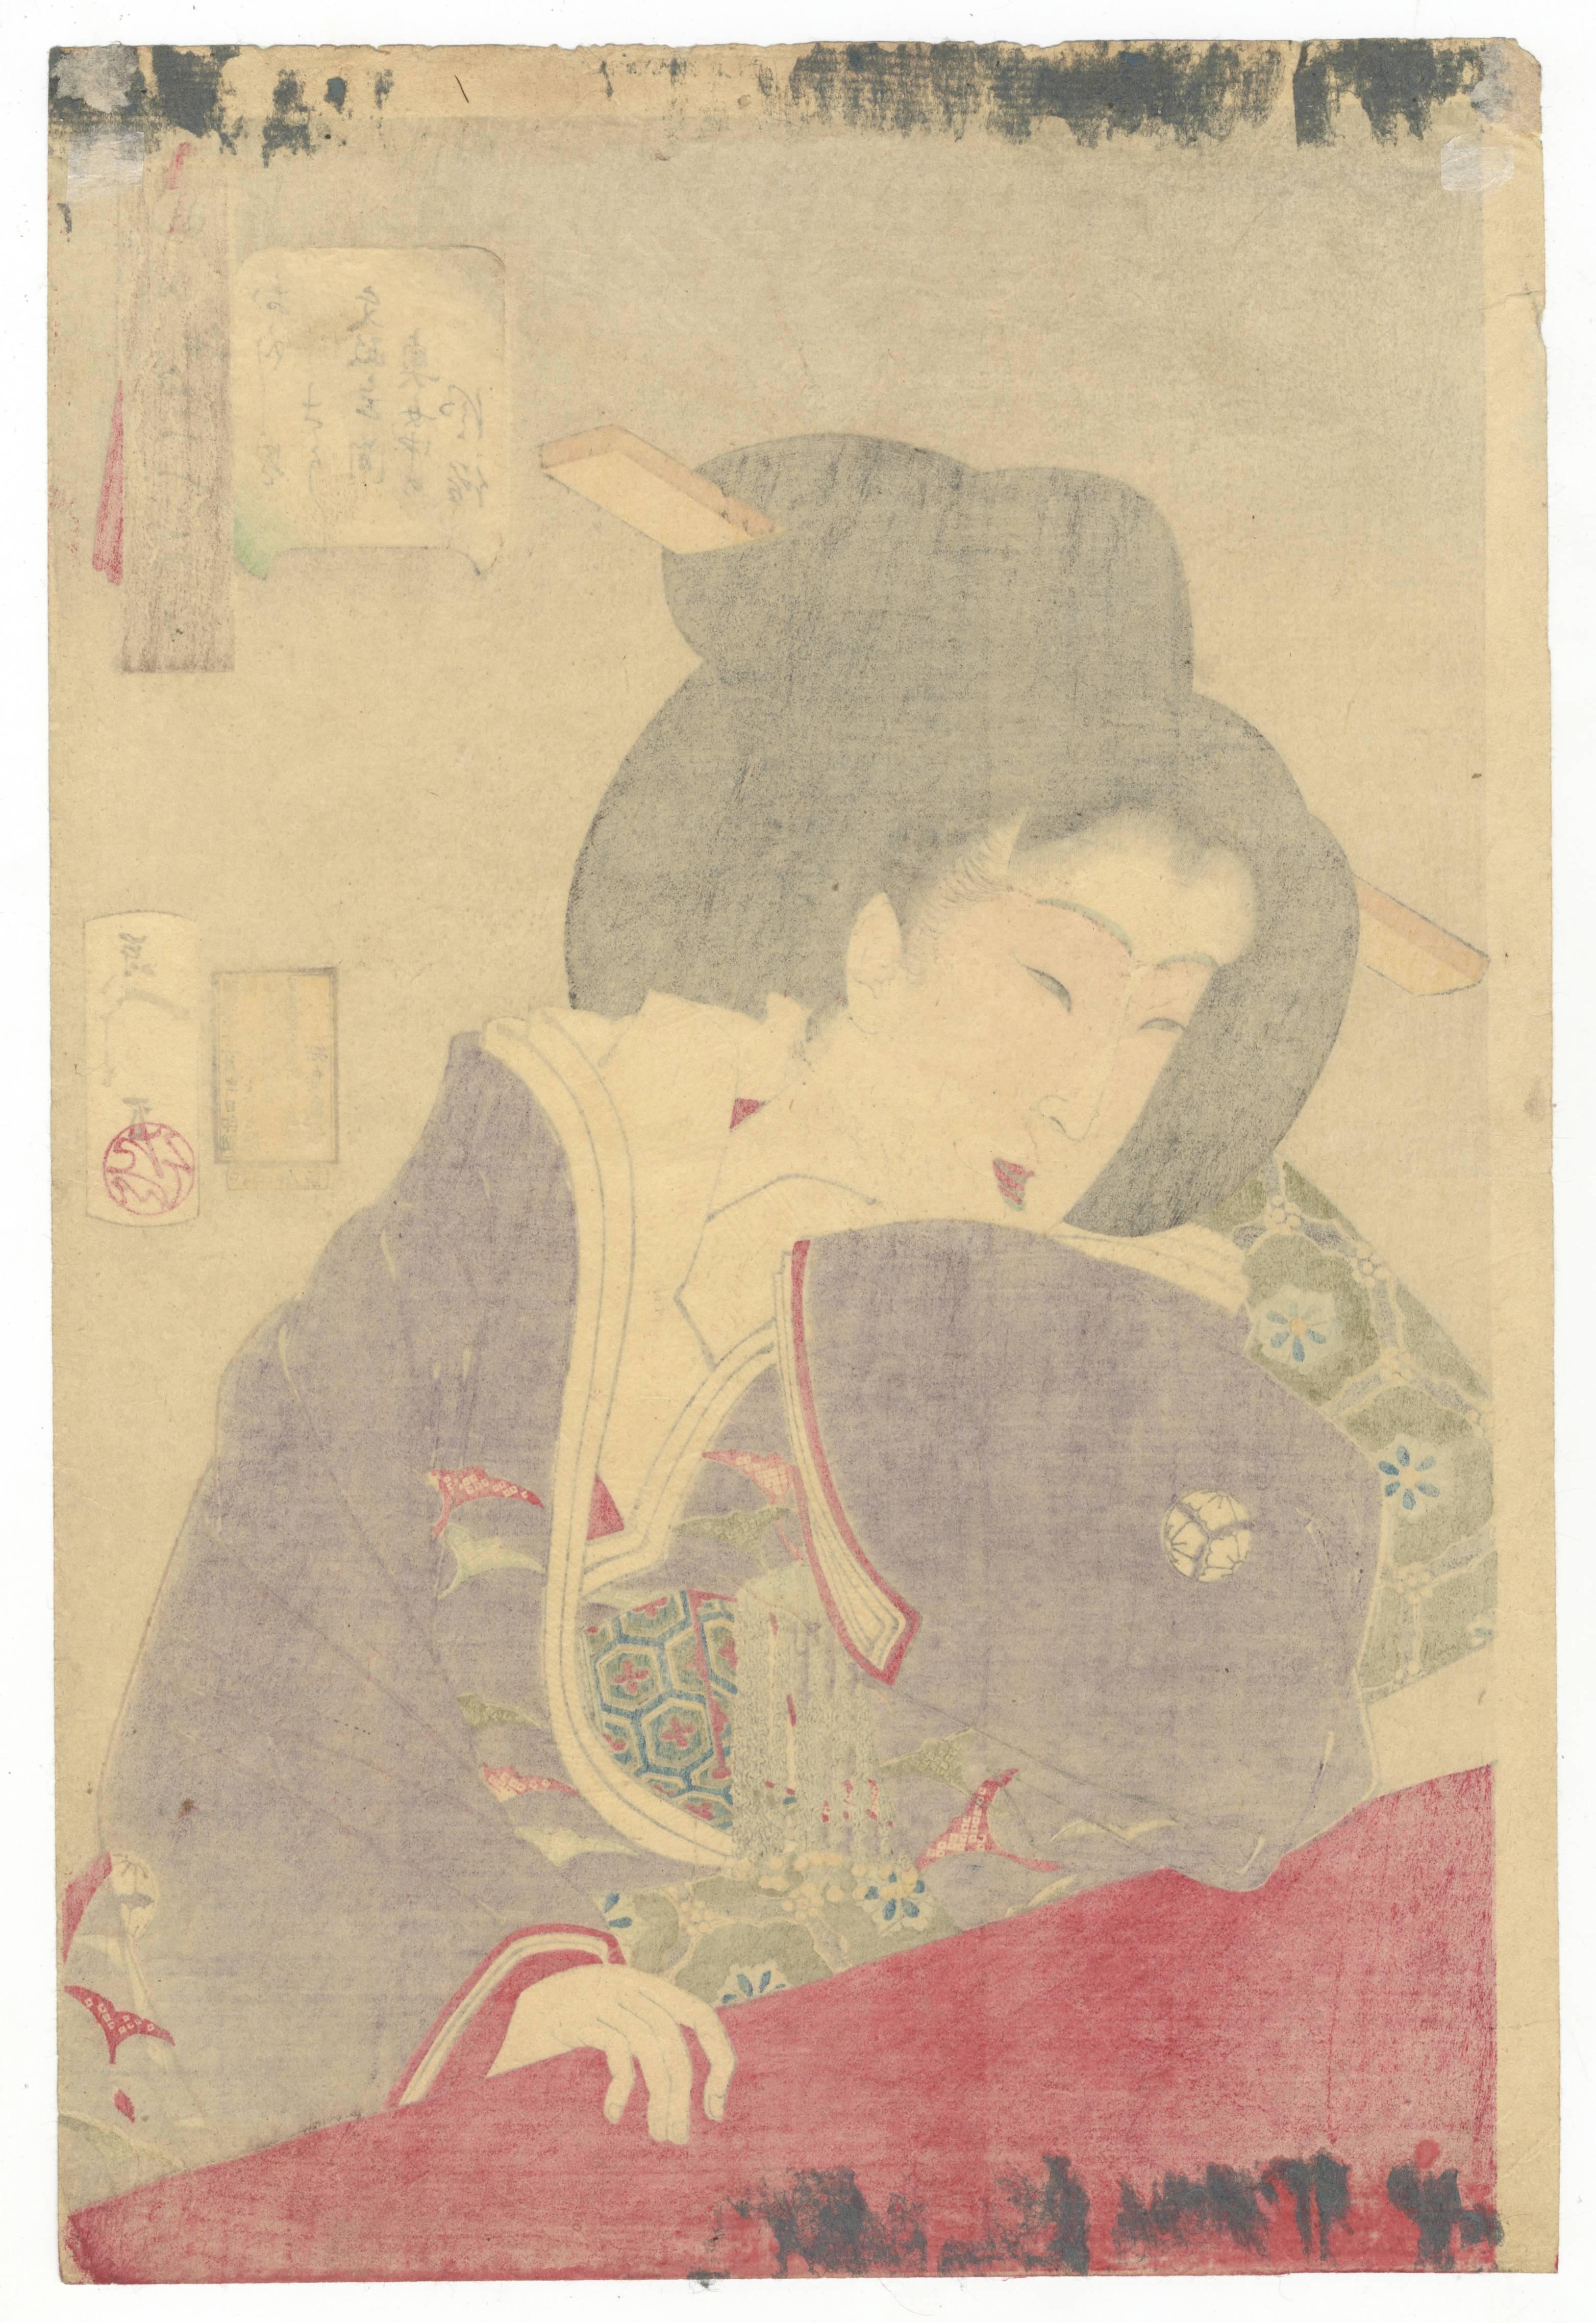 Artist: Yoshitoshi Tsukioka (1839-1892)
Title: 'Looking amused: the appearance of a high-ranking maid in the Bunsei era' (1818-1830) - 'Omoshiro-so: Bunsei nenkan okujochu no fuzoku'
Series: Thirty-two Aspects of Customs and Manners (Fuzoku